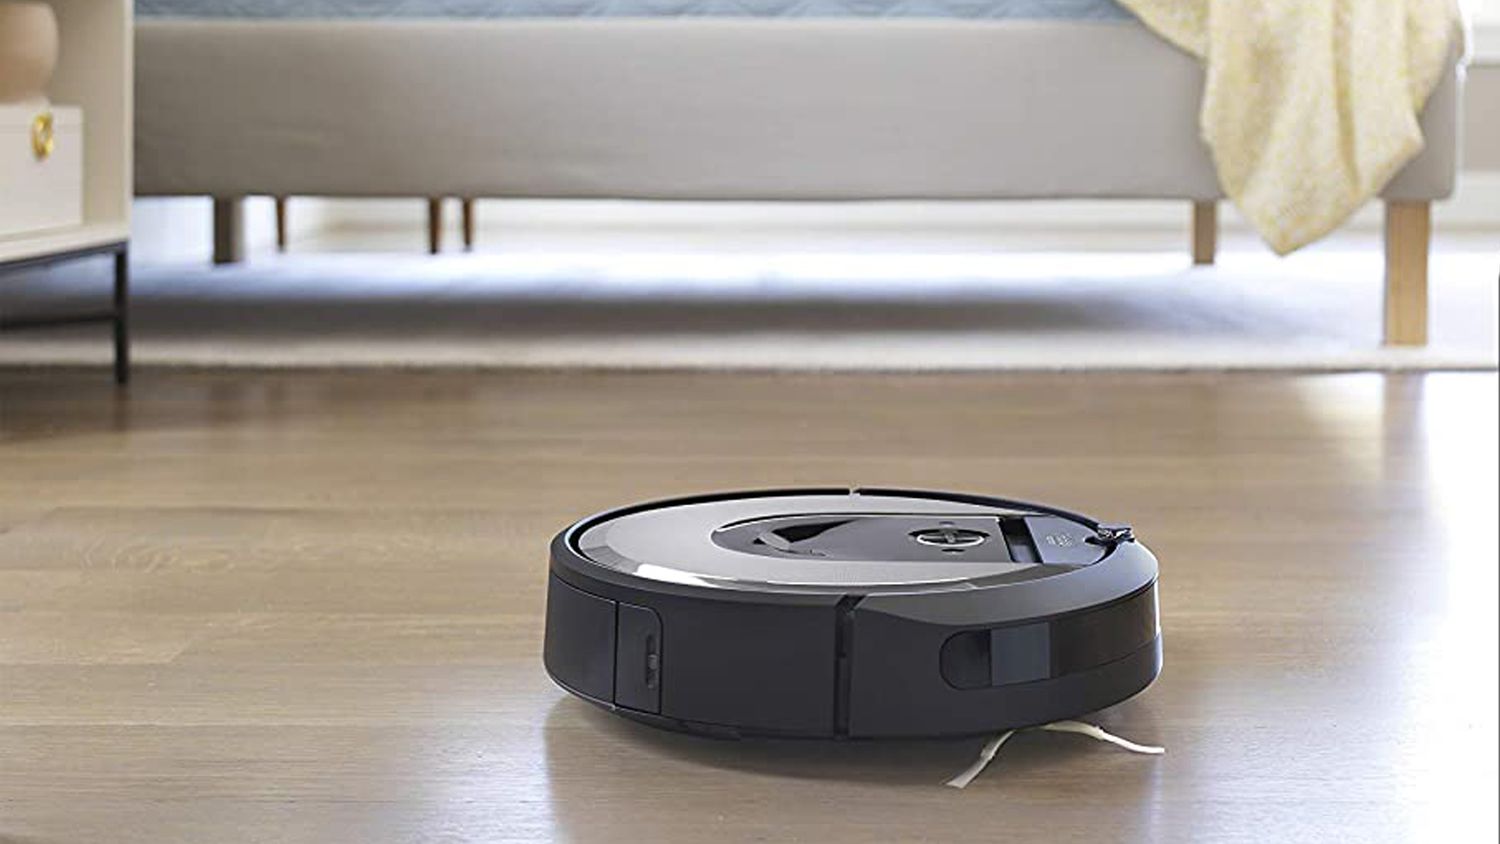 Best Robot Vacuums For Hardwood Floors, Best Irobot For Laminate Floors